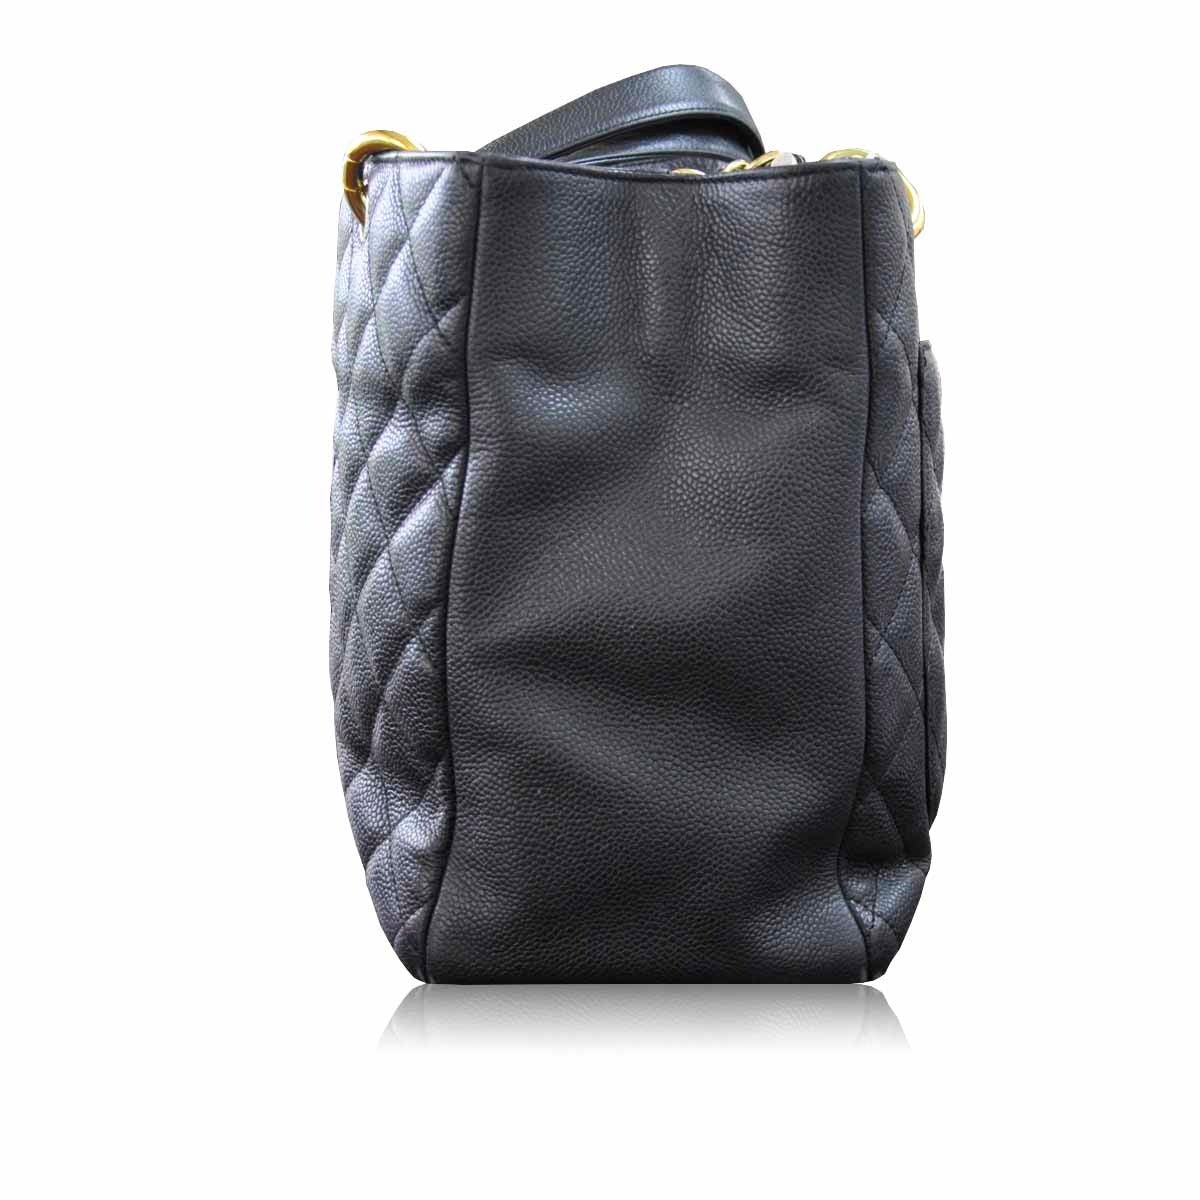 Chanel Grand Shopper Tote GST Black Leather Handbag 1